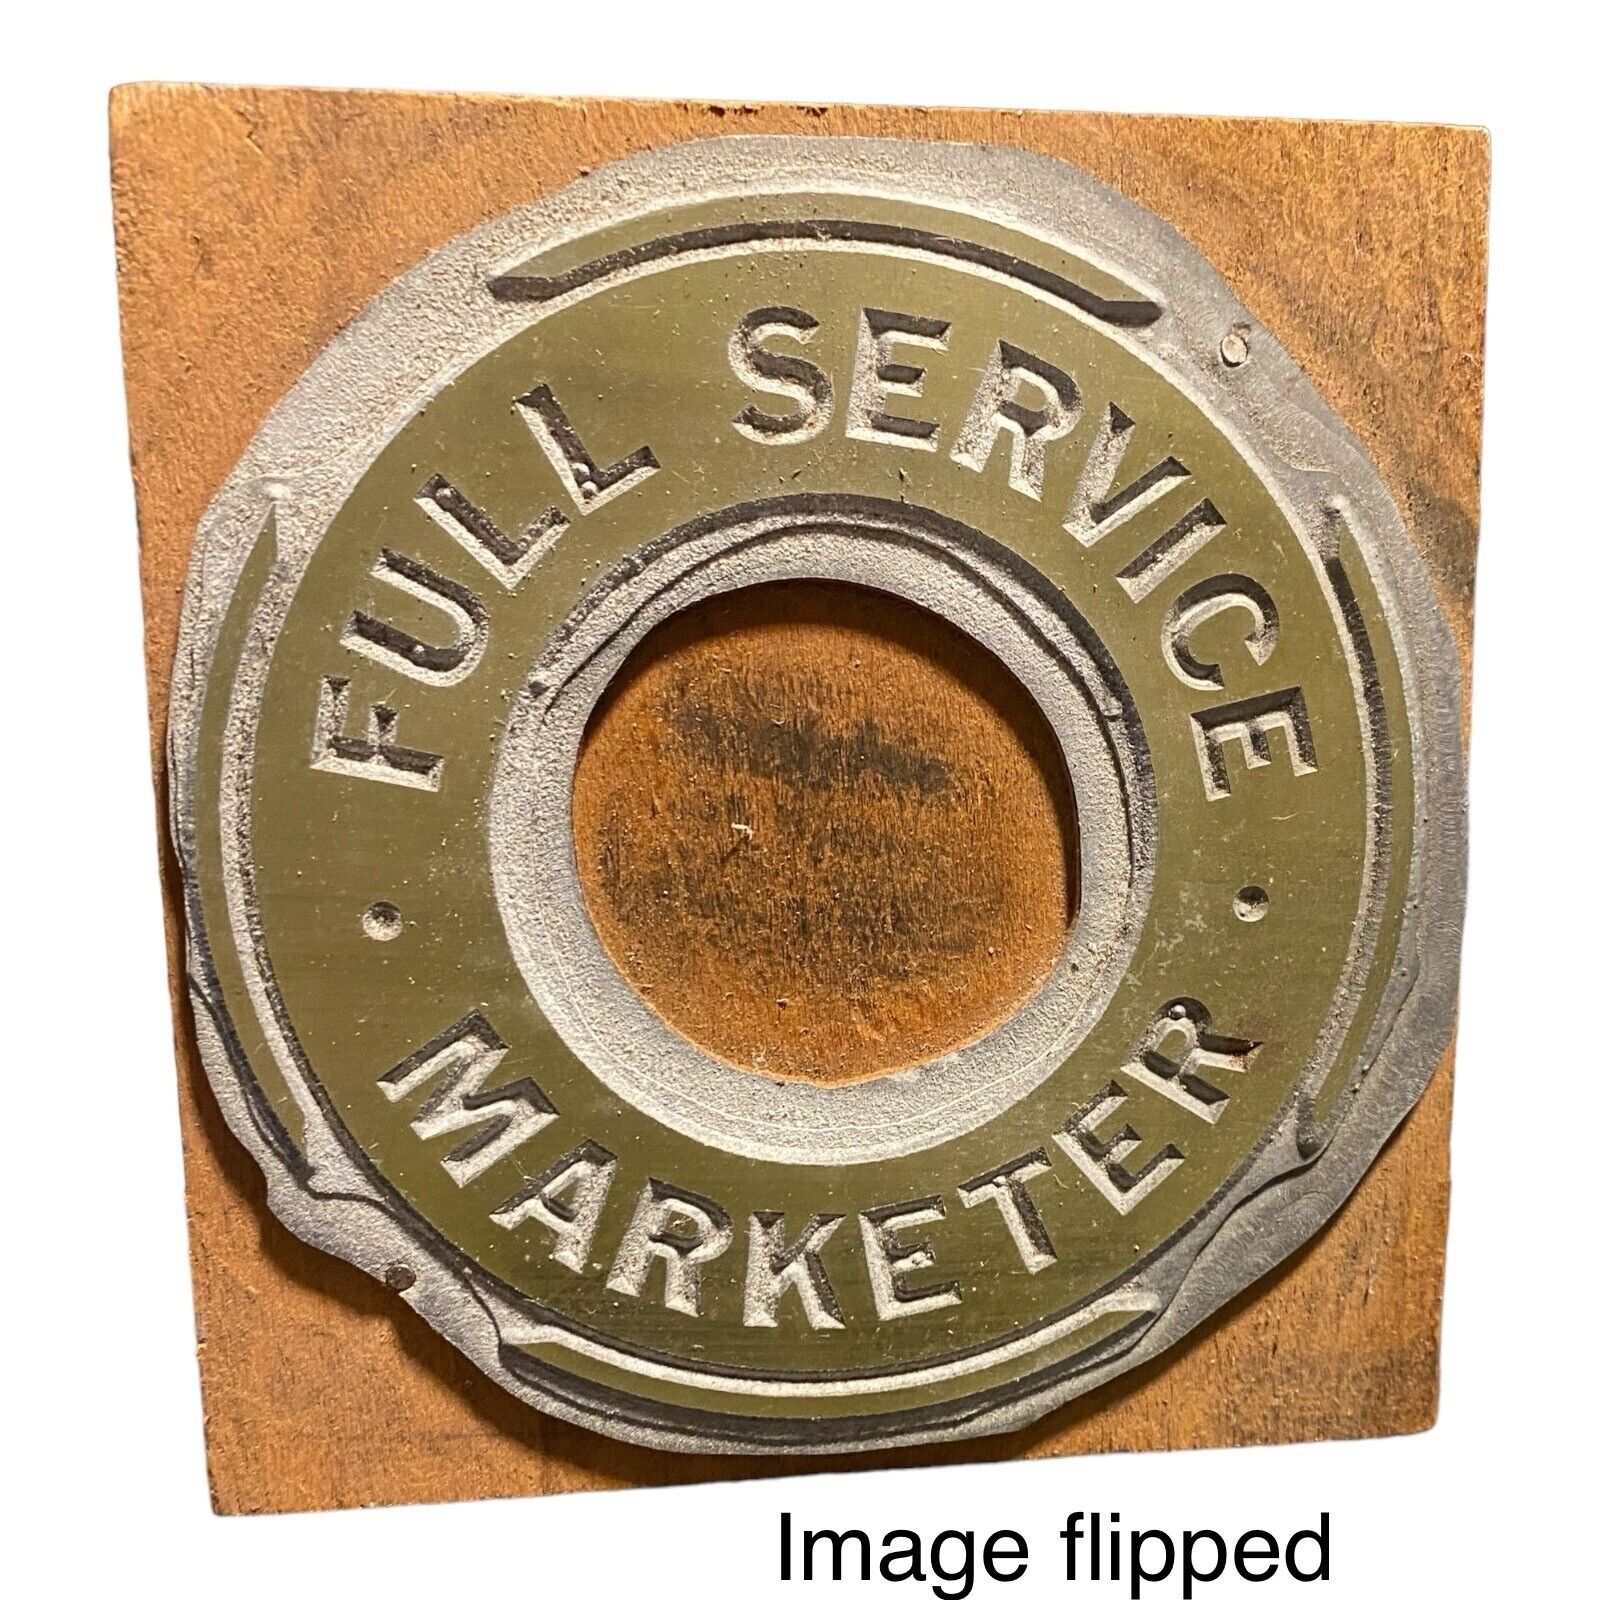 Full Service Marketer Print Block Letterpress Printing Vintage Advertising